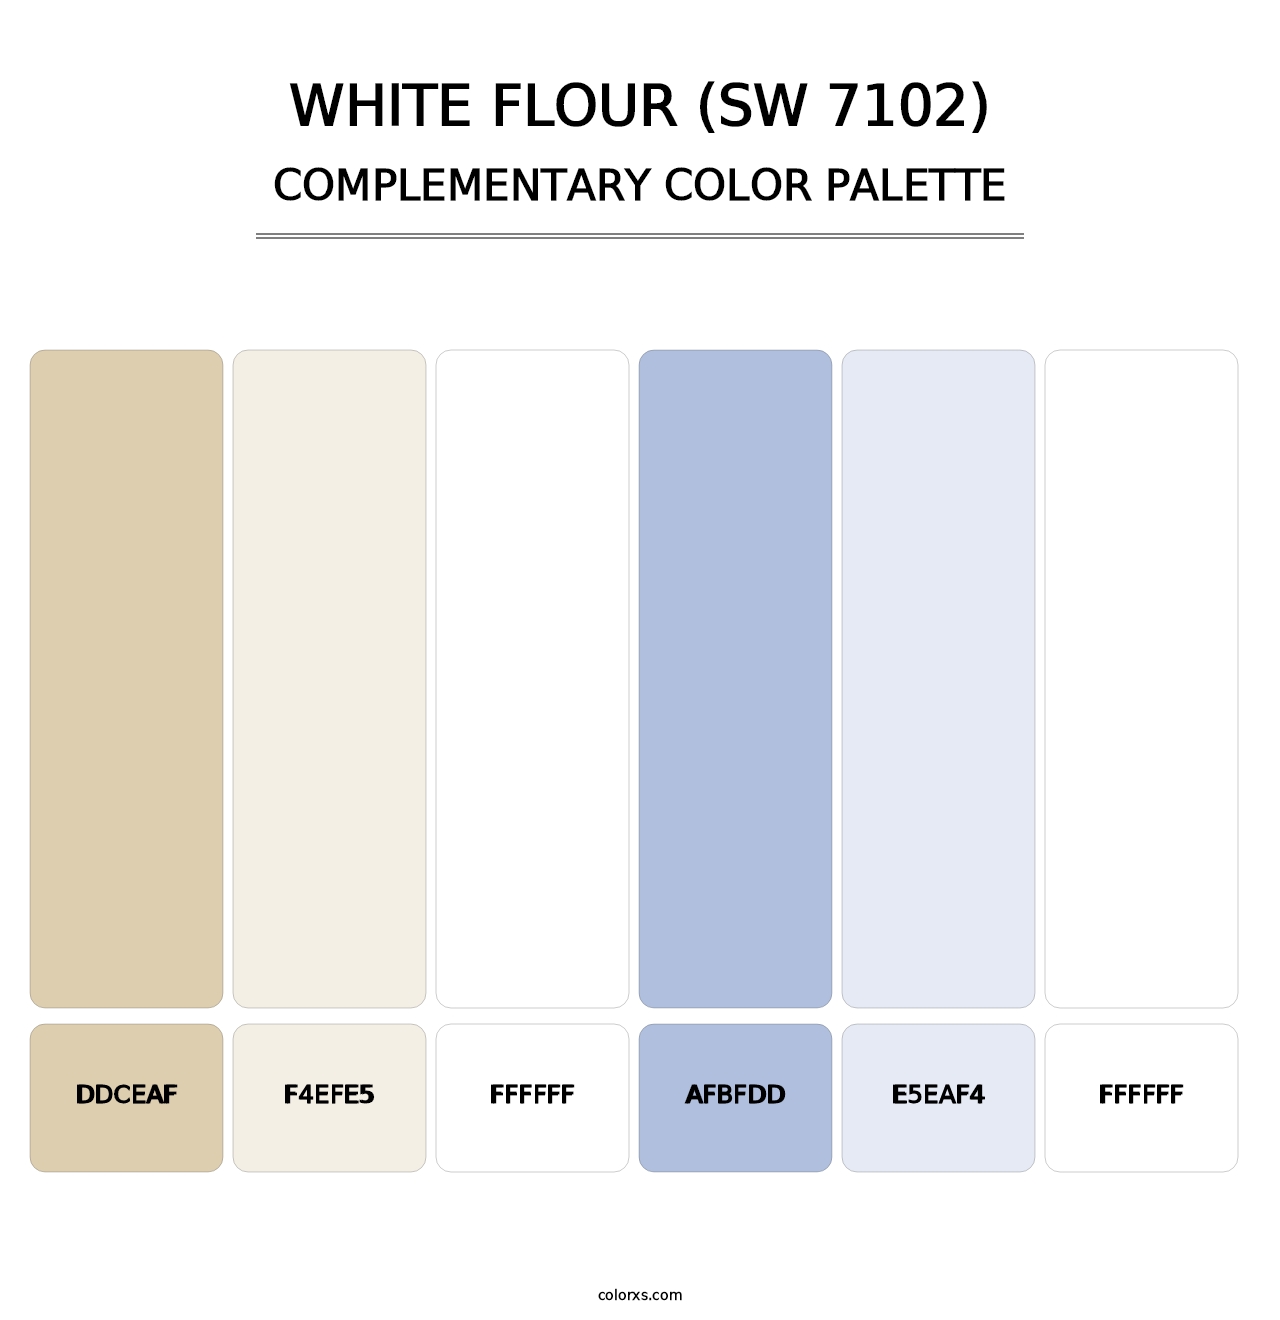 White Flour (SW 7102) - Complementary Color Palette